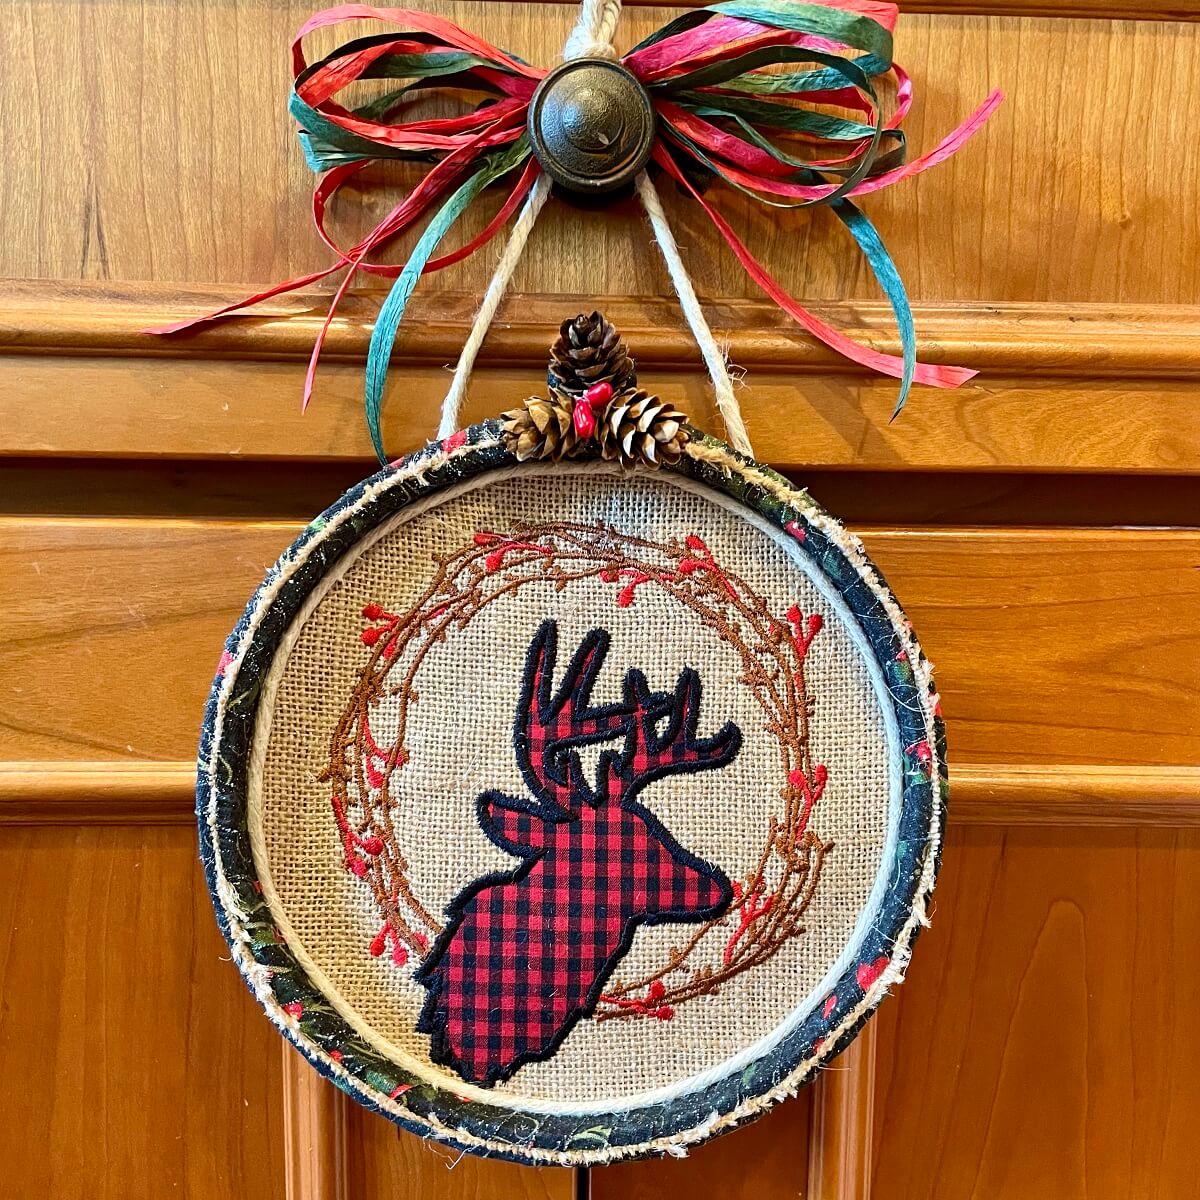 Deer Applique Wreath | In-the-hoop embroidery project